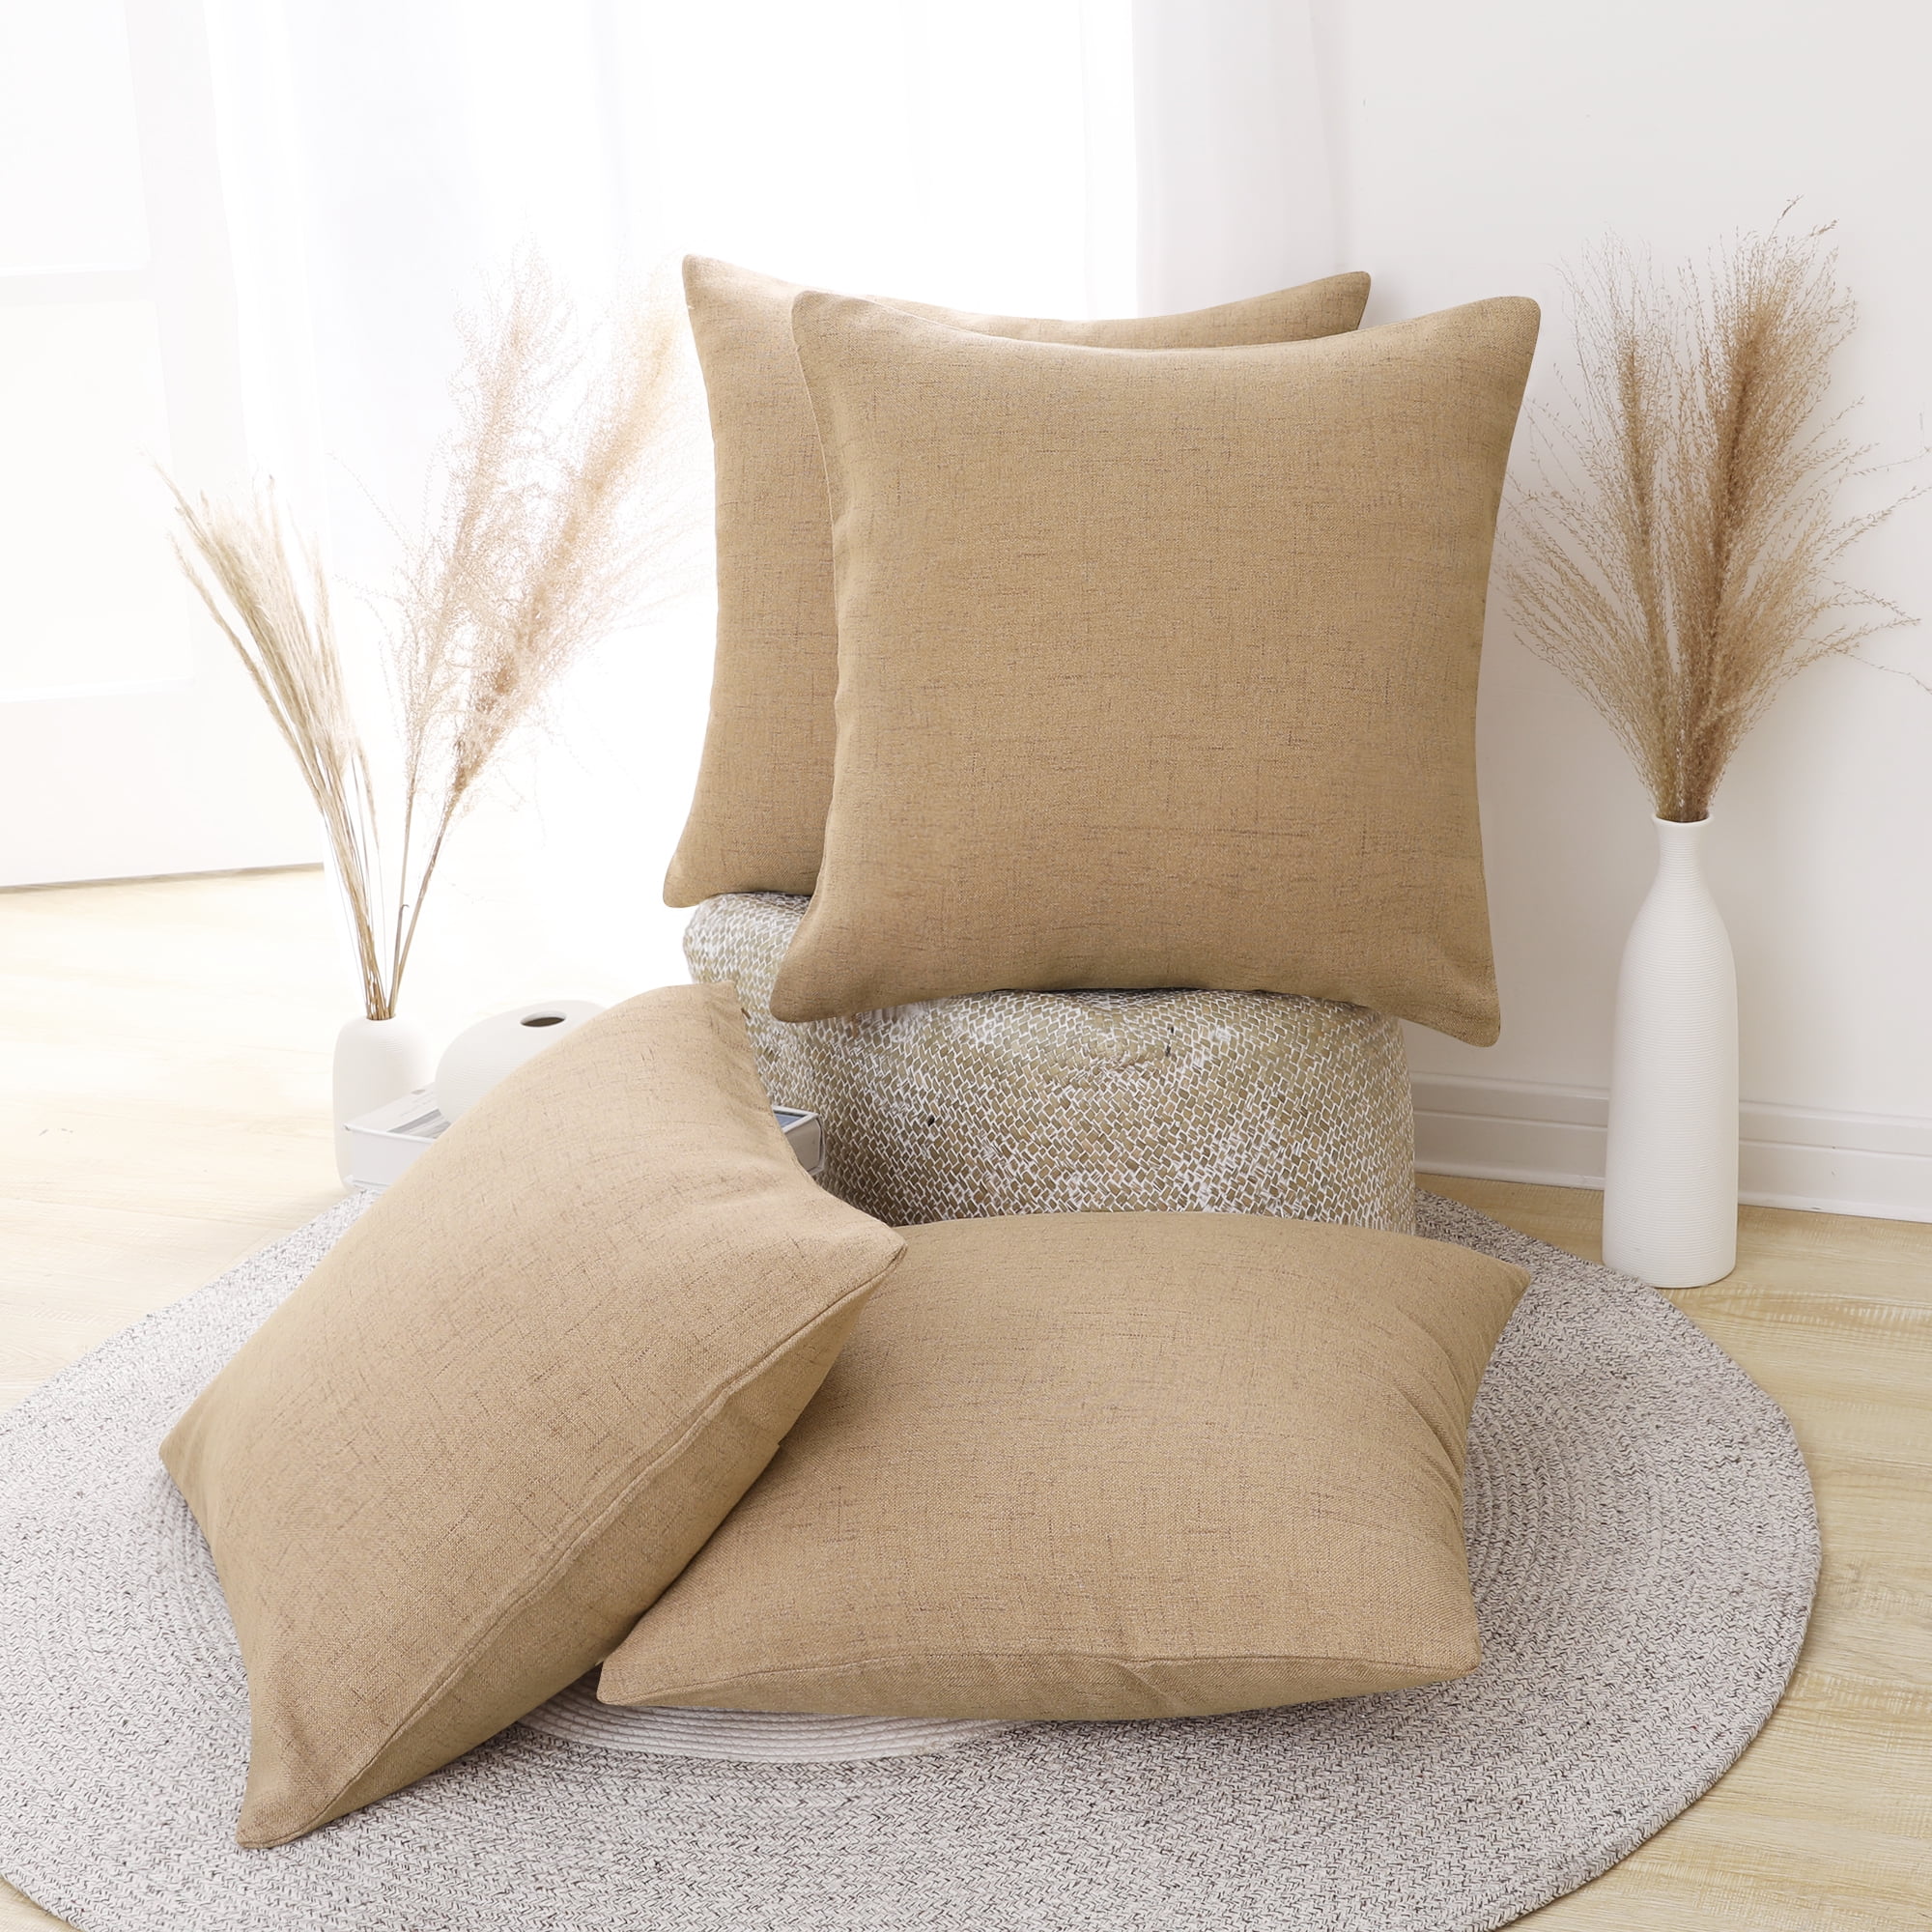 New 16" 18" 20" 22" Large Plain Linen Cushion Cover Pillow Cases Home Decor